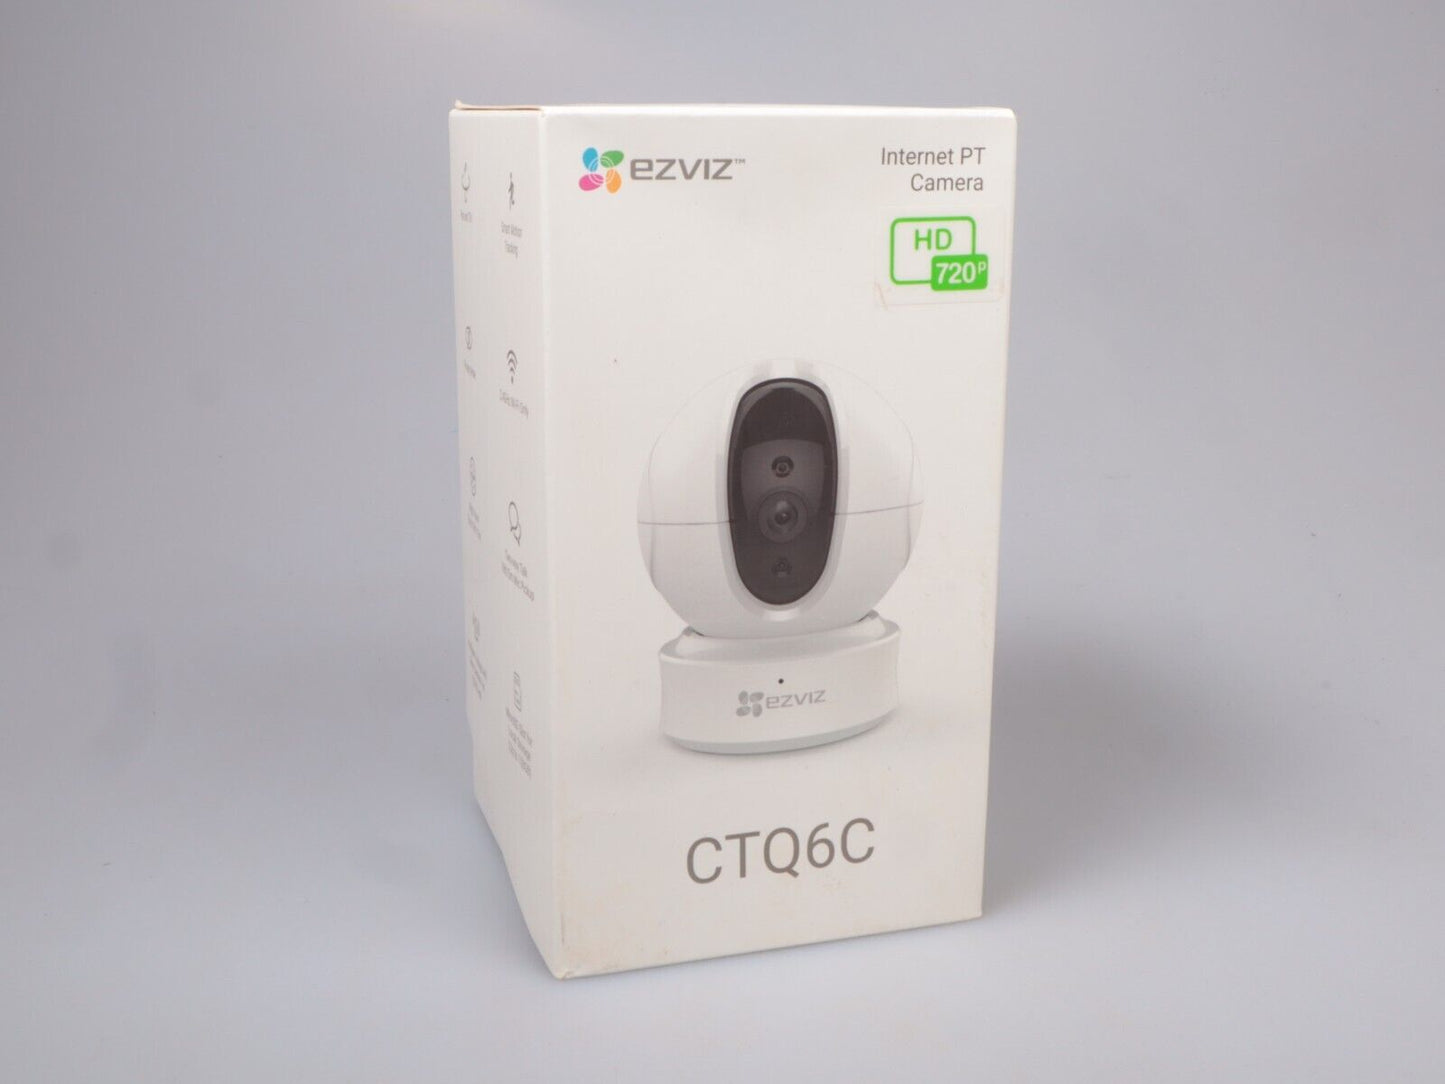 EZVIZ CTQ6C | Model CS-CV246 | Internet PT Camera | HD 720P | White